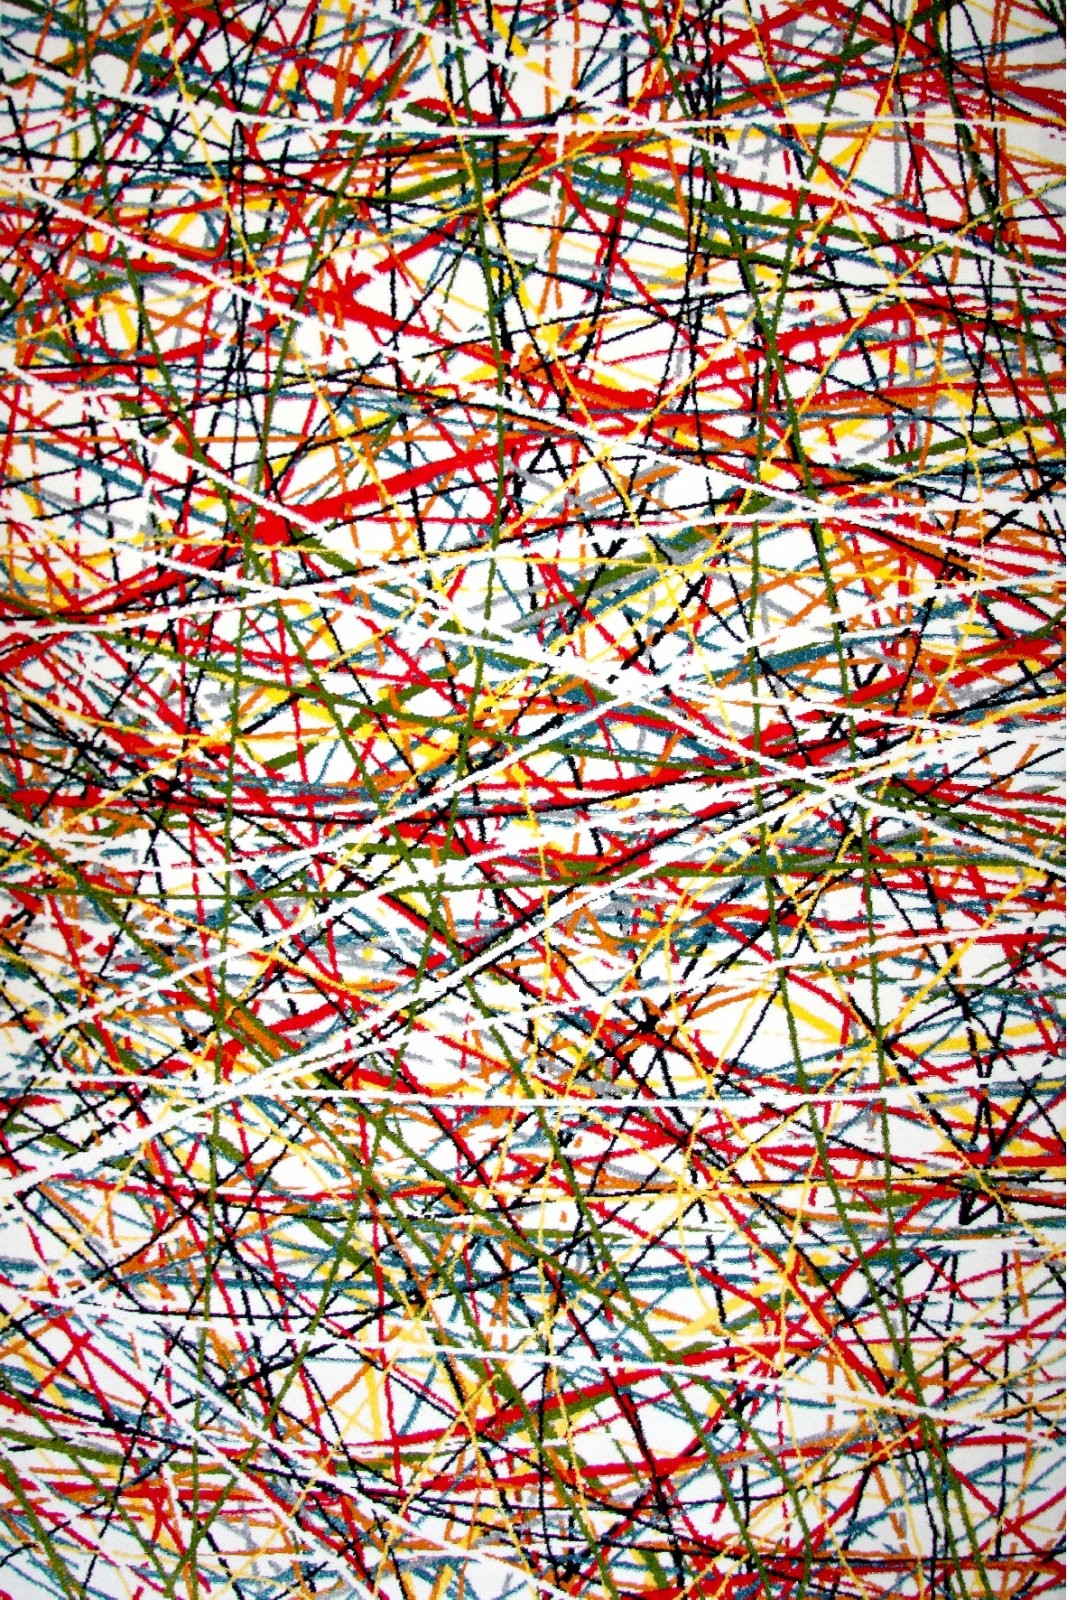 Covor Art Alb/Multicolor, 160 cm x 230 cm, Kolibri 11035